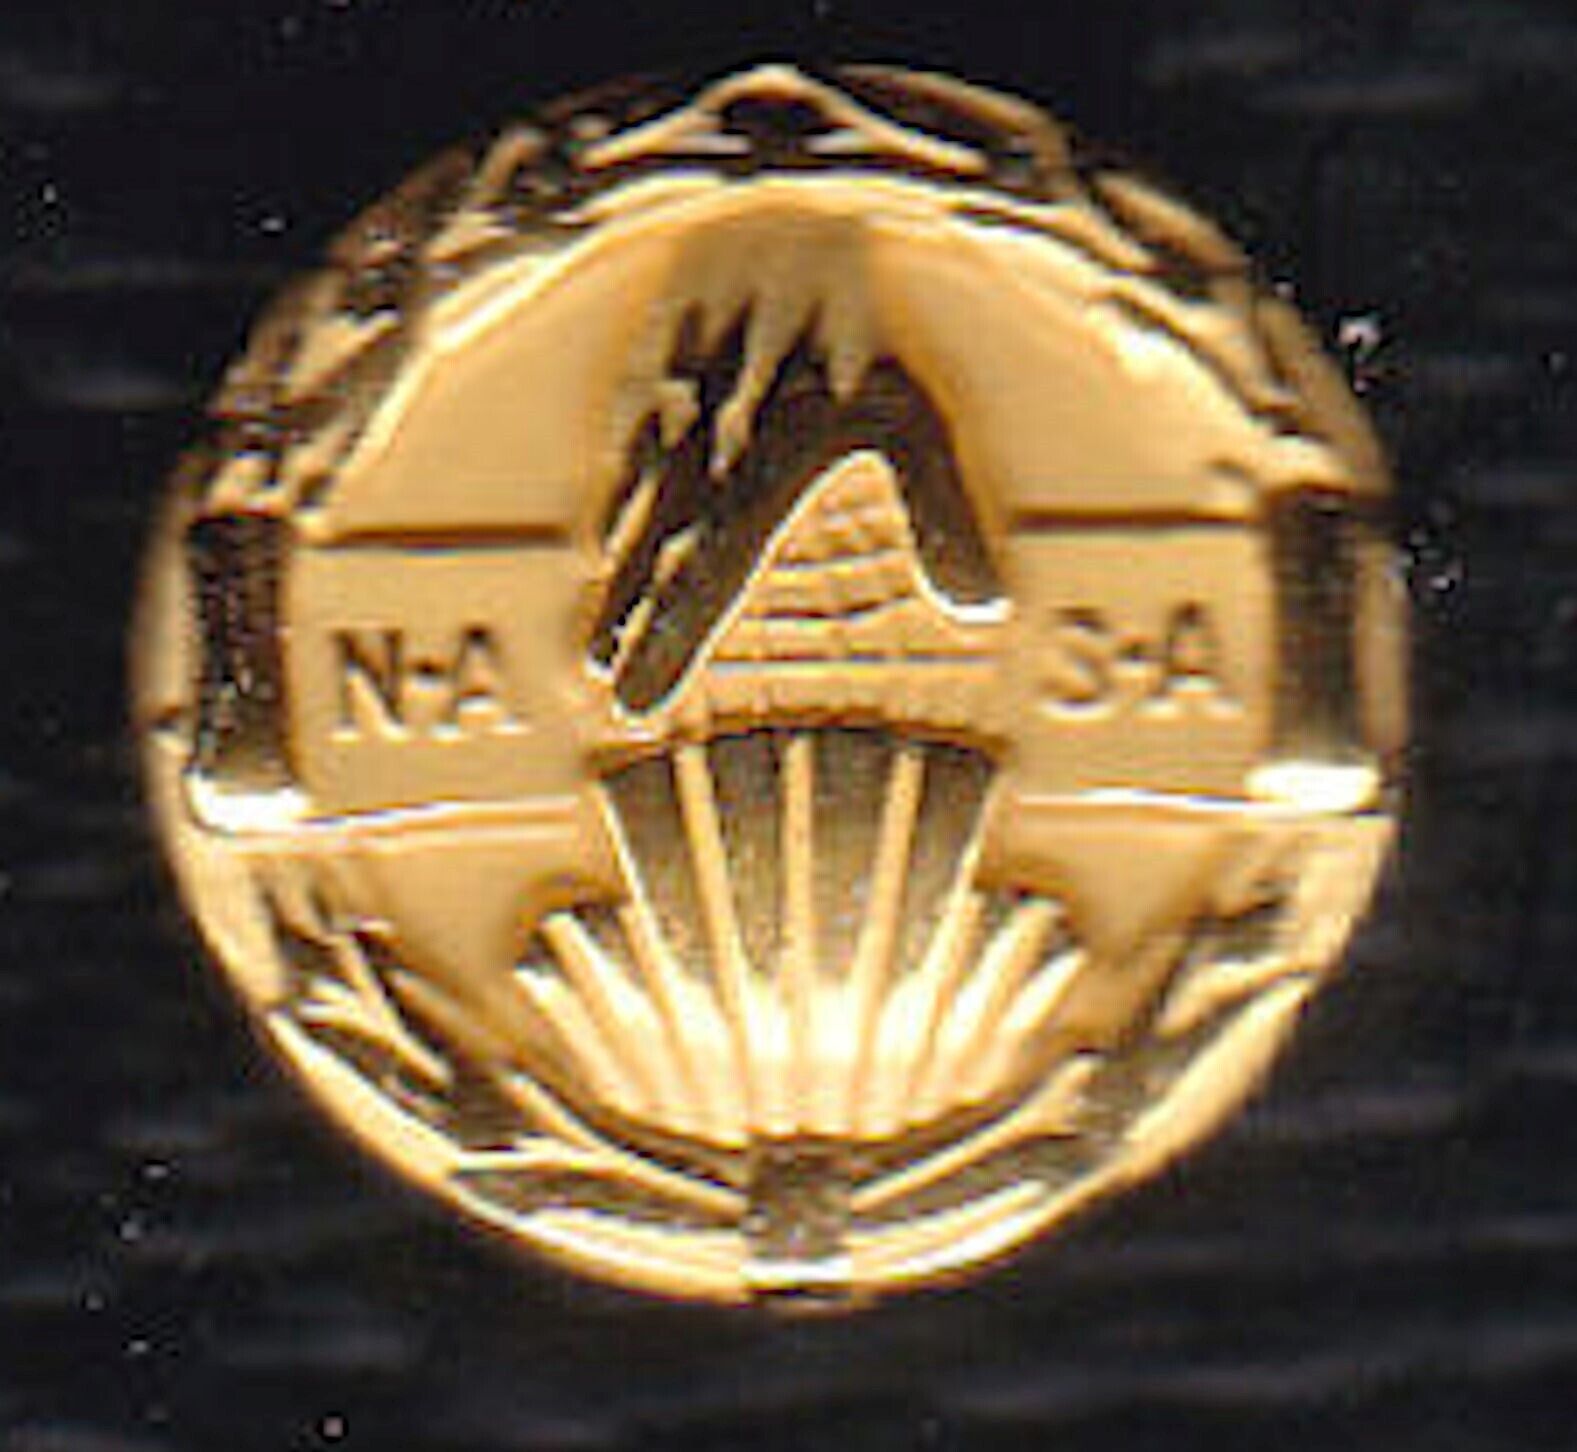 NASA EXCEPTIONAL TECHNOLOGY ACHIEVEMENT MEDAL LAPEL PIN